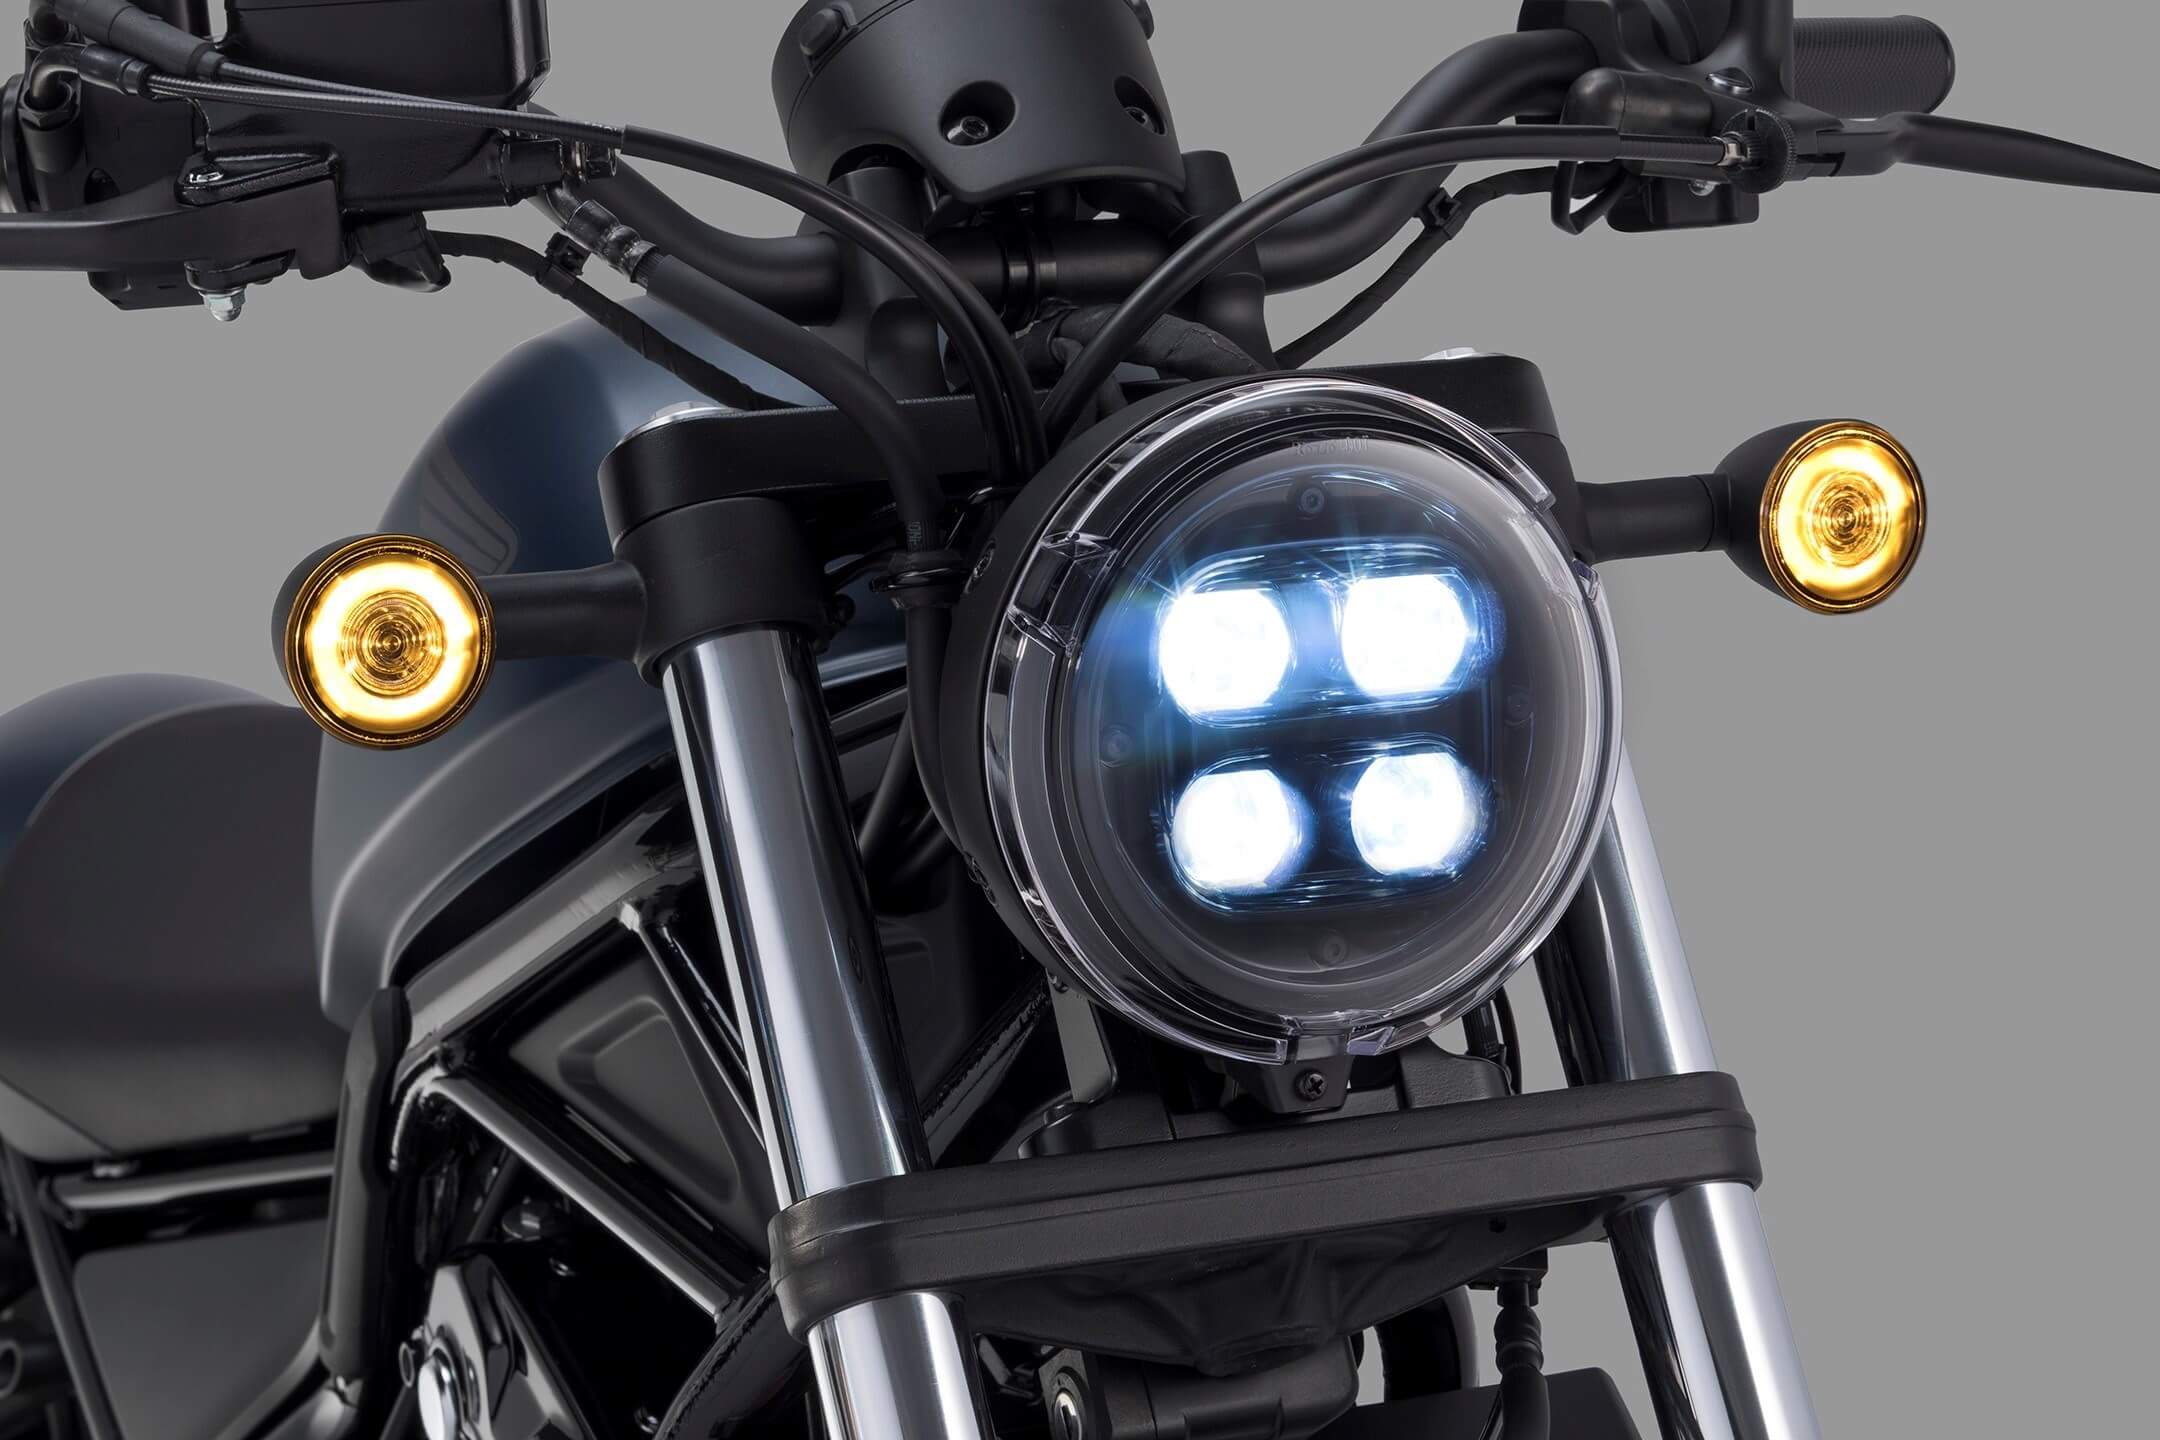 2020 Honda Rebel 500 Review / Specs | CMX500 Price, Colors, Accessories | Cruiser Motorcycle / Bobber